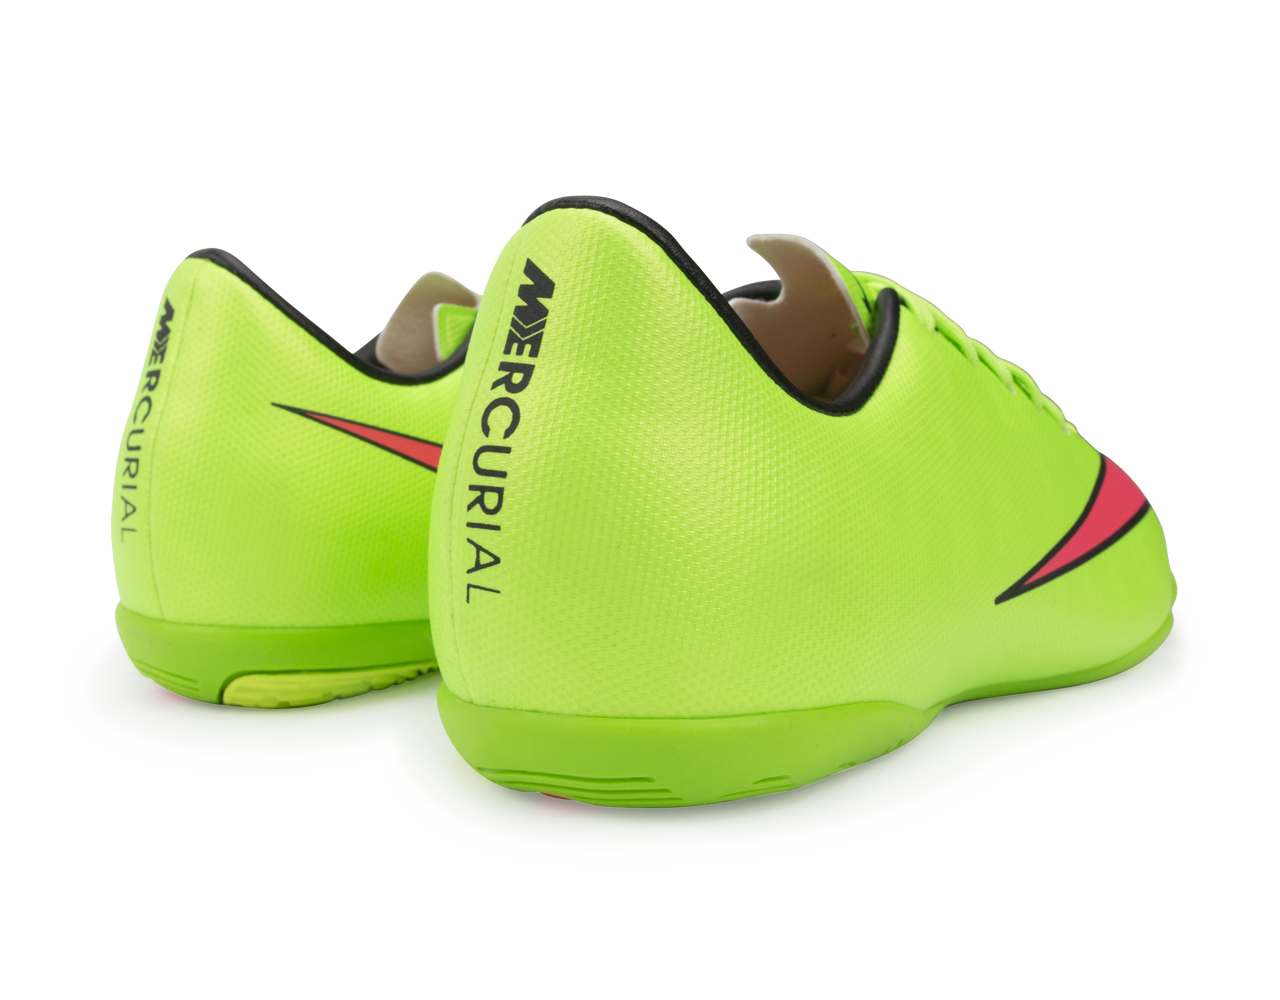 Nike Kids Mercurial Victory V Indoor Soccer Shoes Electric Green/Hyper Punch/Black